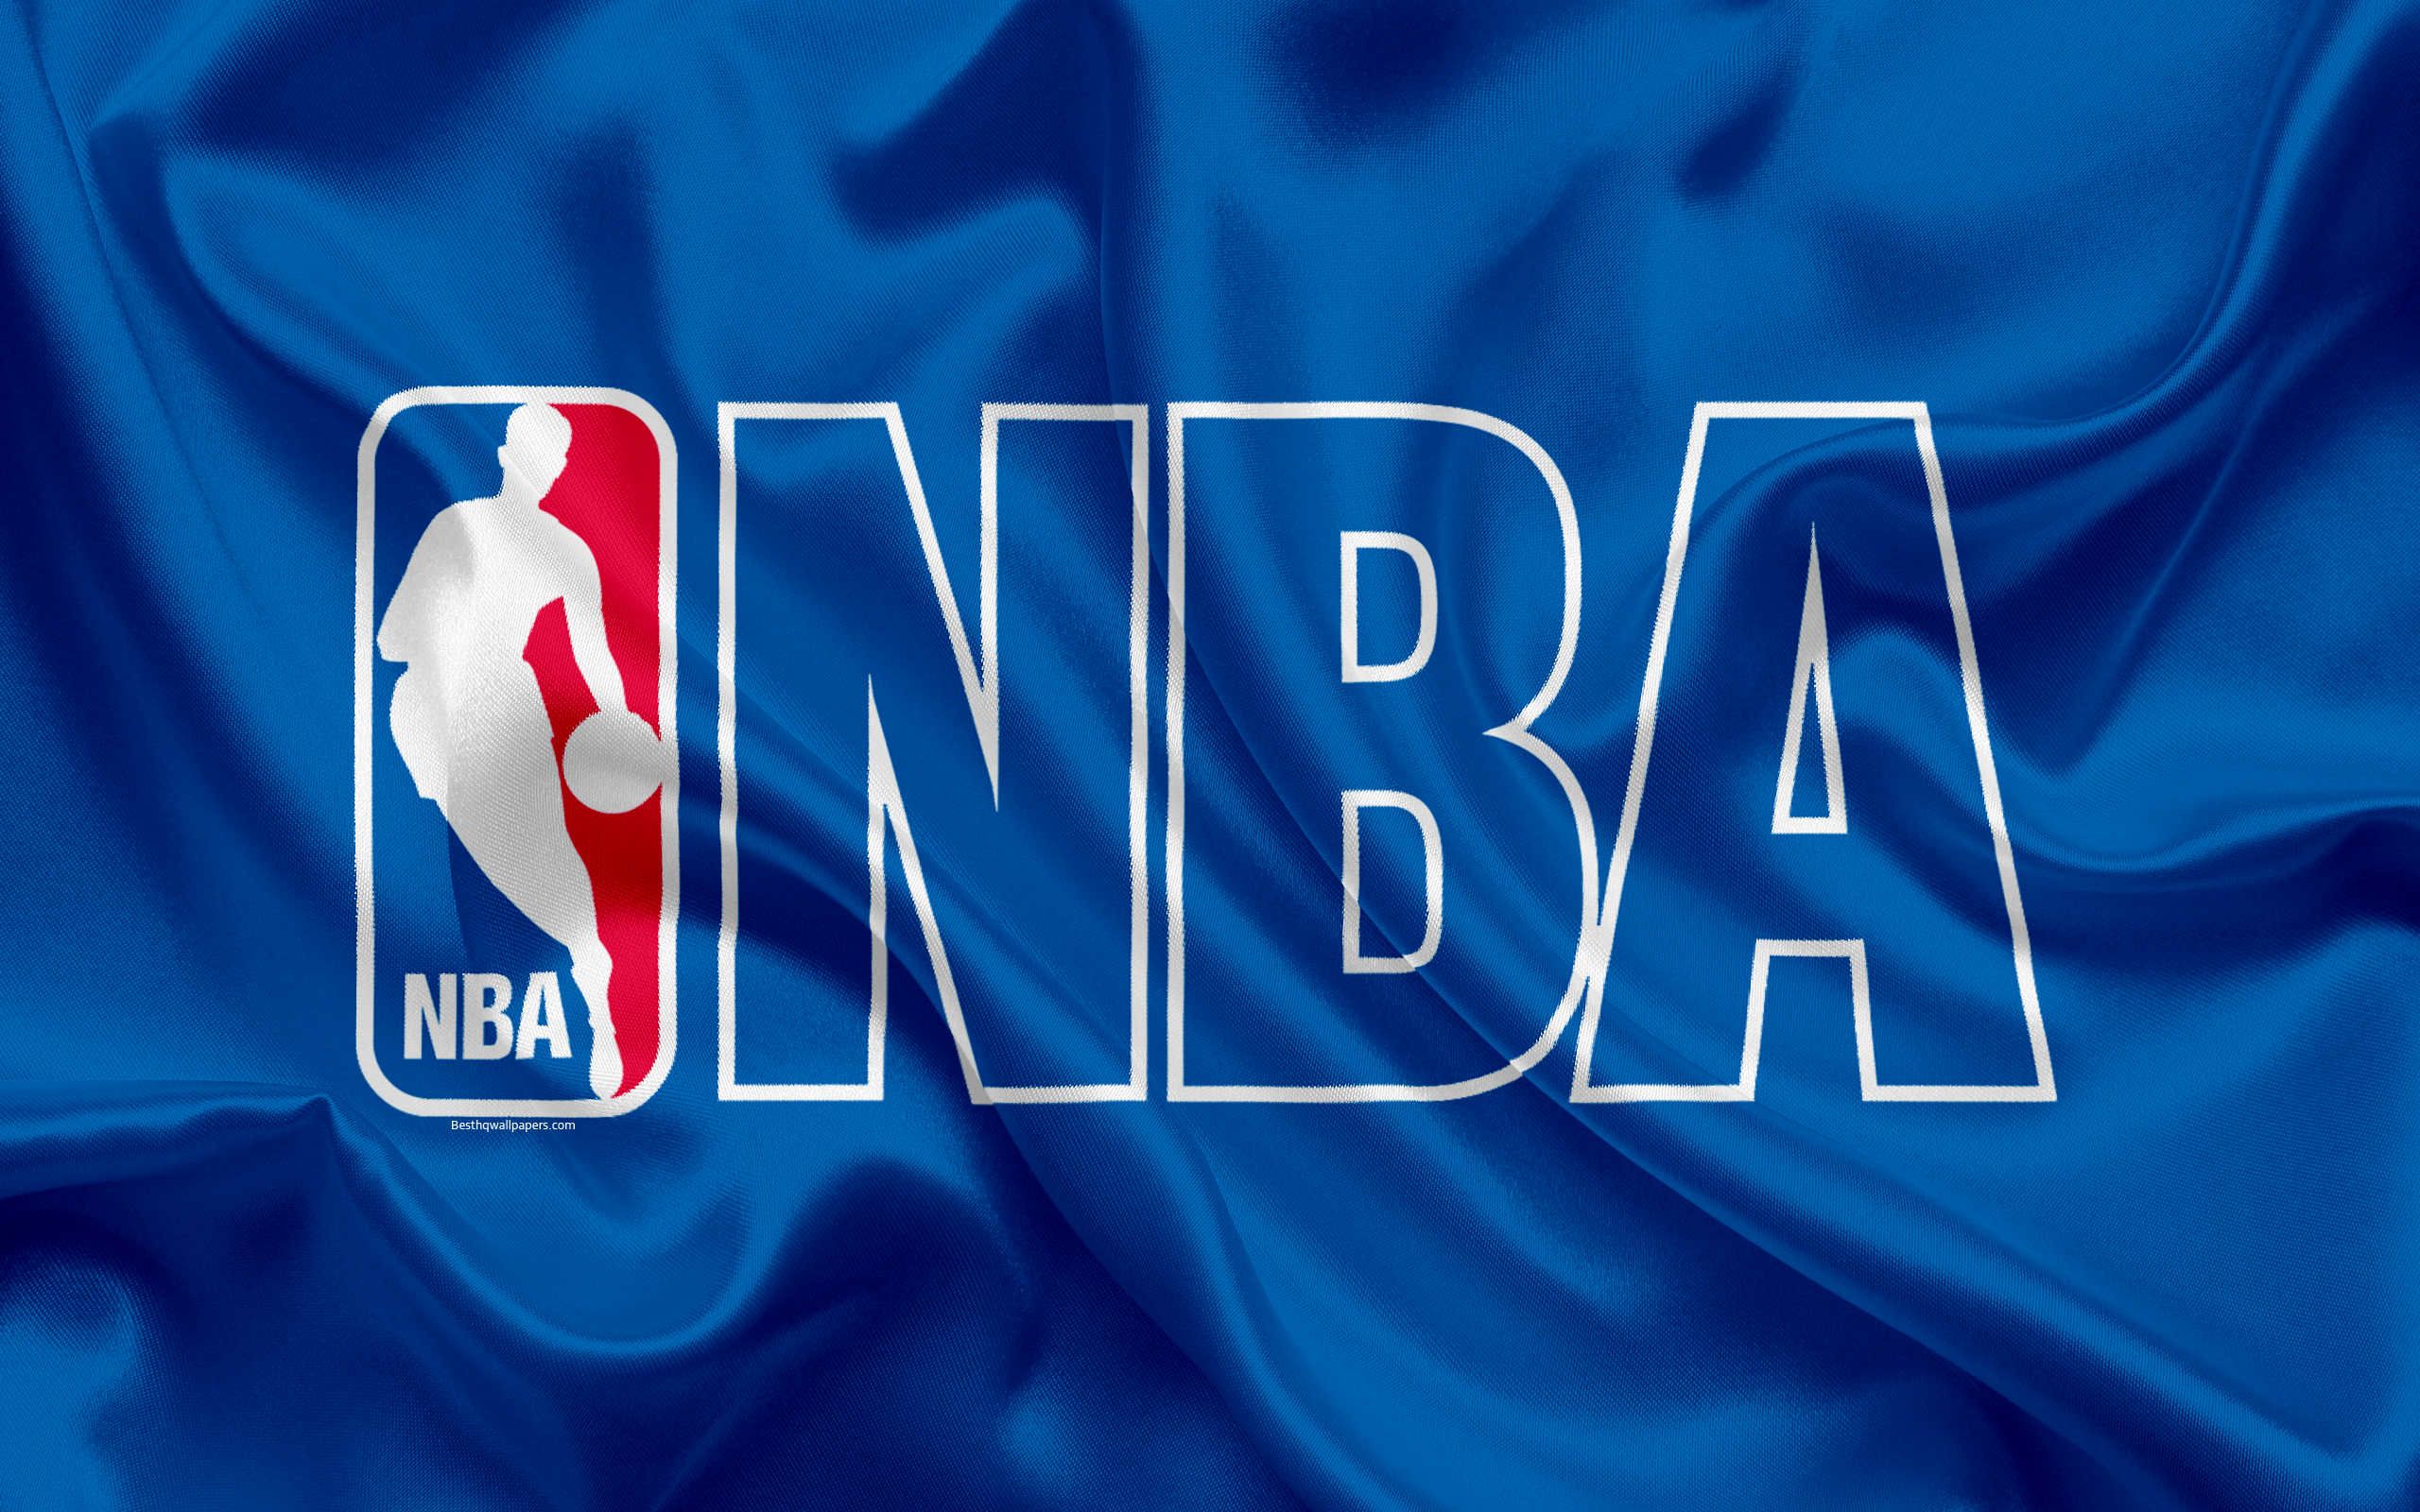 Nba National Basketball Association Usa Basketball 462964 Hd Wallpaper Backgrounds Download